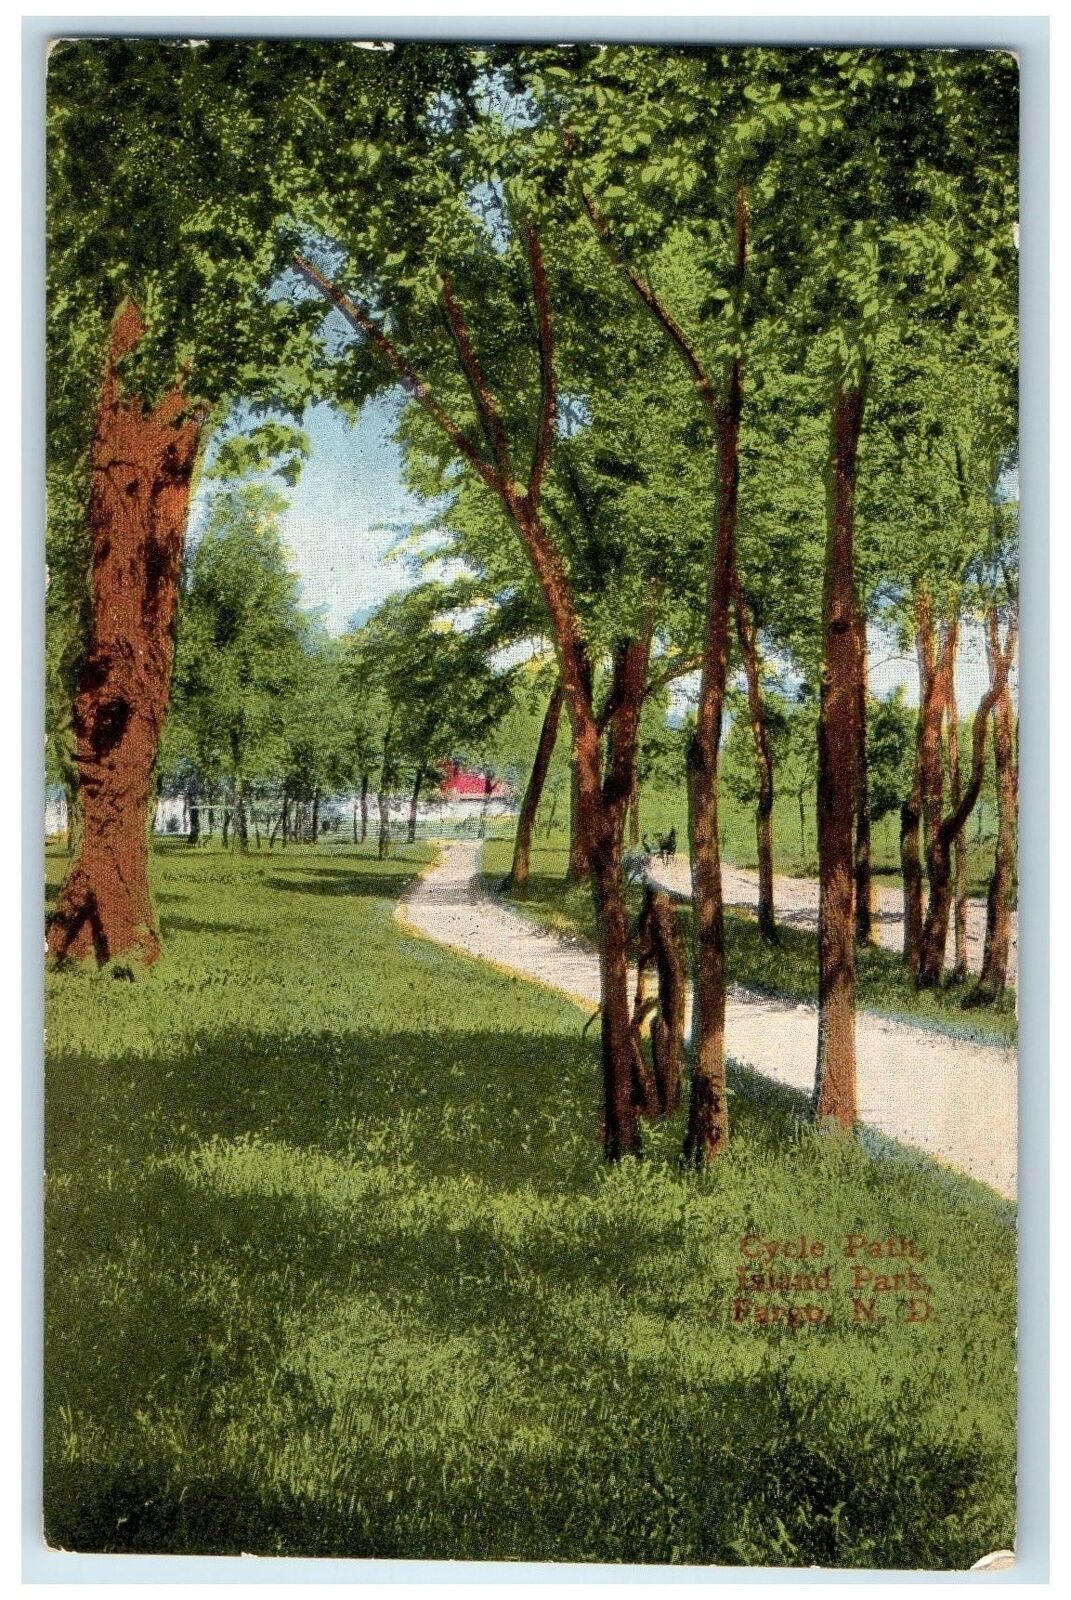 c1950 Cycle Path Island Park Grove Pathways Fargo North Dakota Vintage Postcard